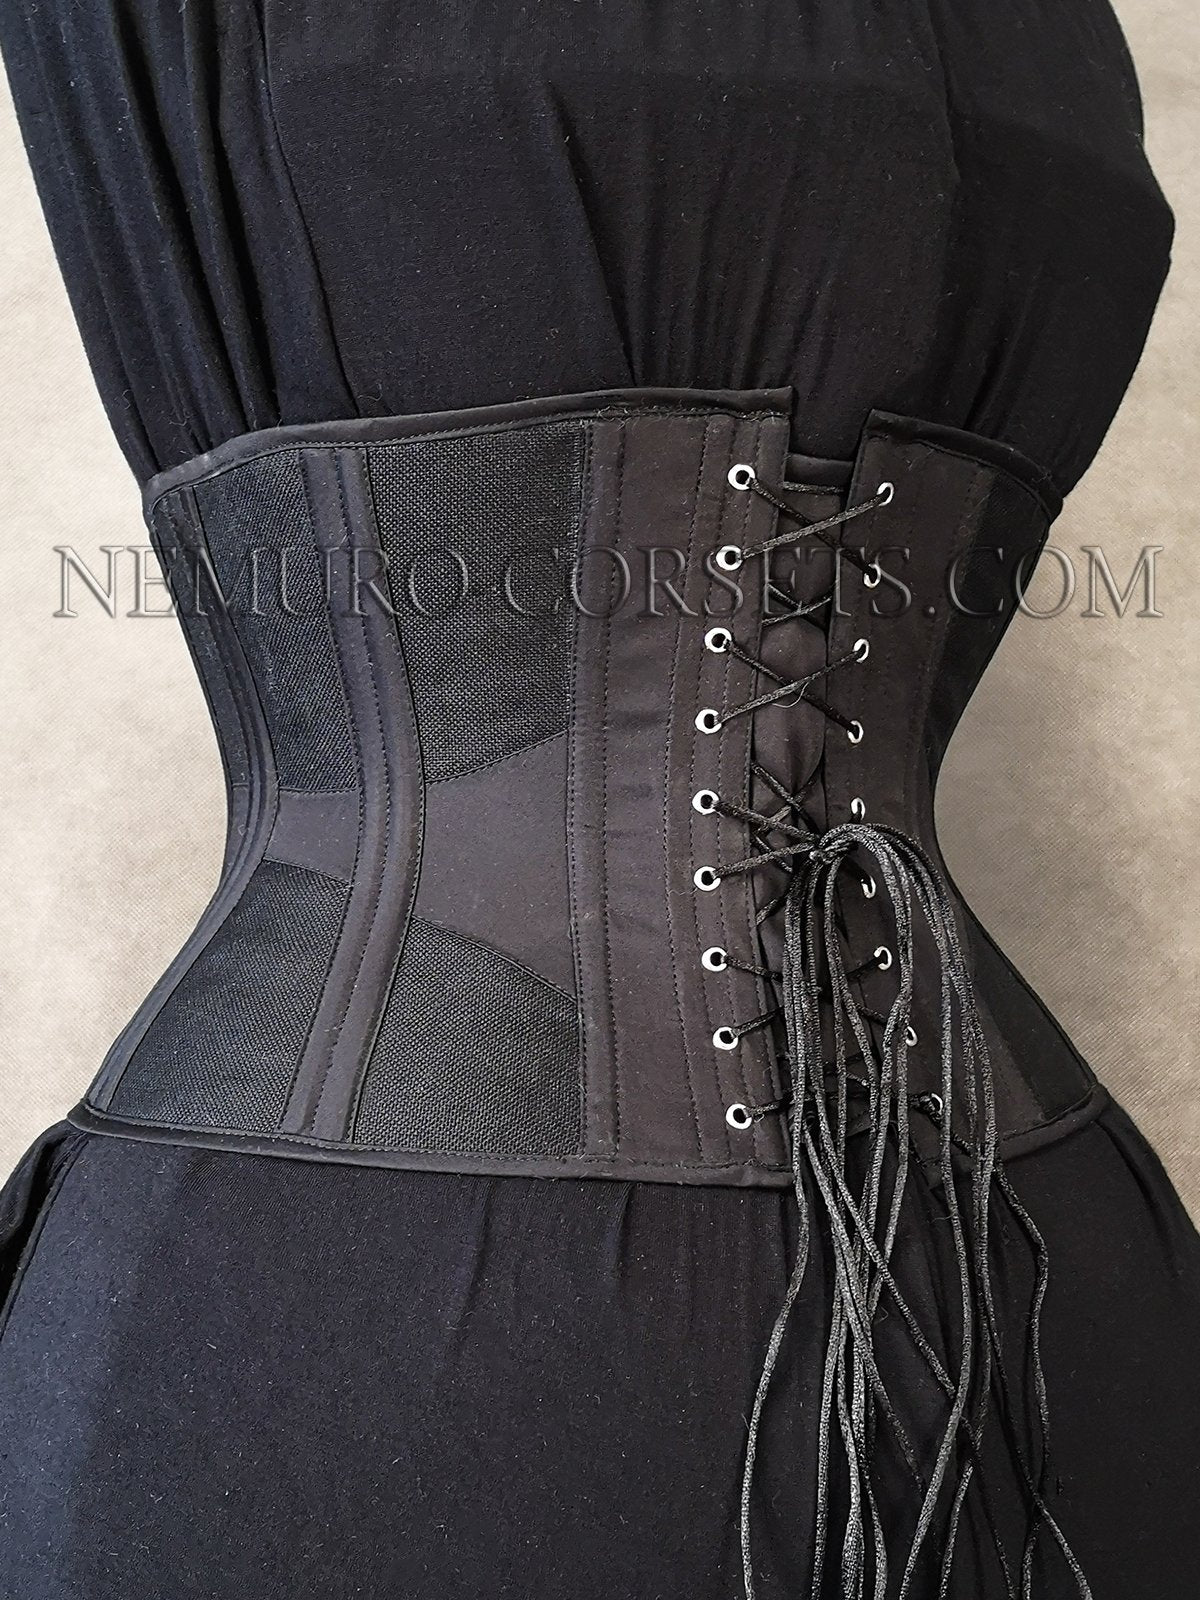 Ventilated Victorian corset 1890s - Custom order Nemuro-Corsets